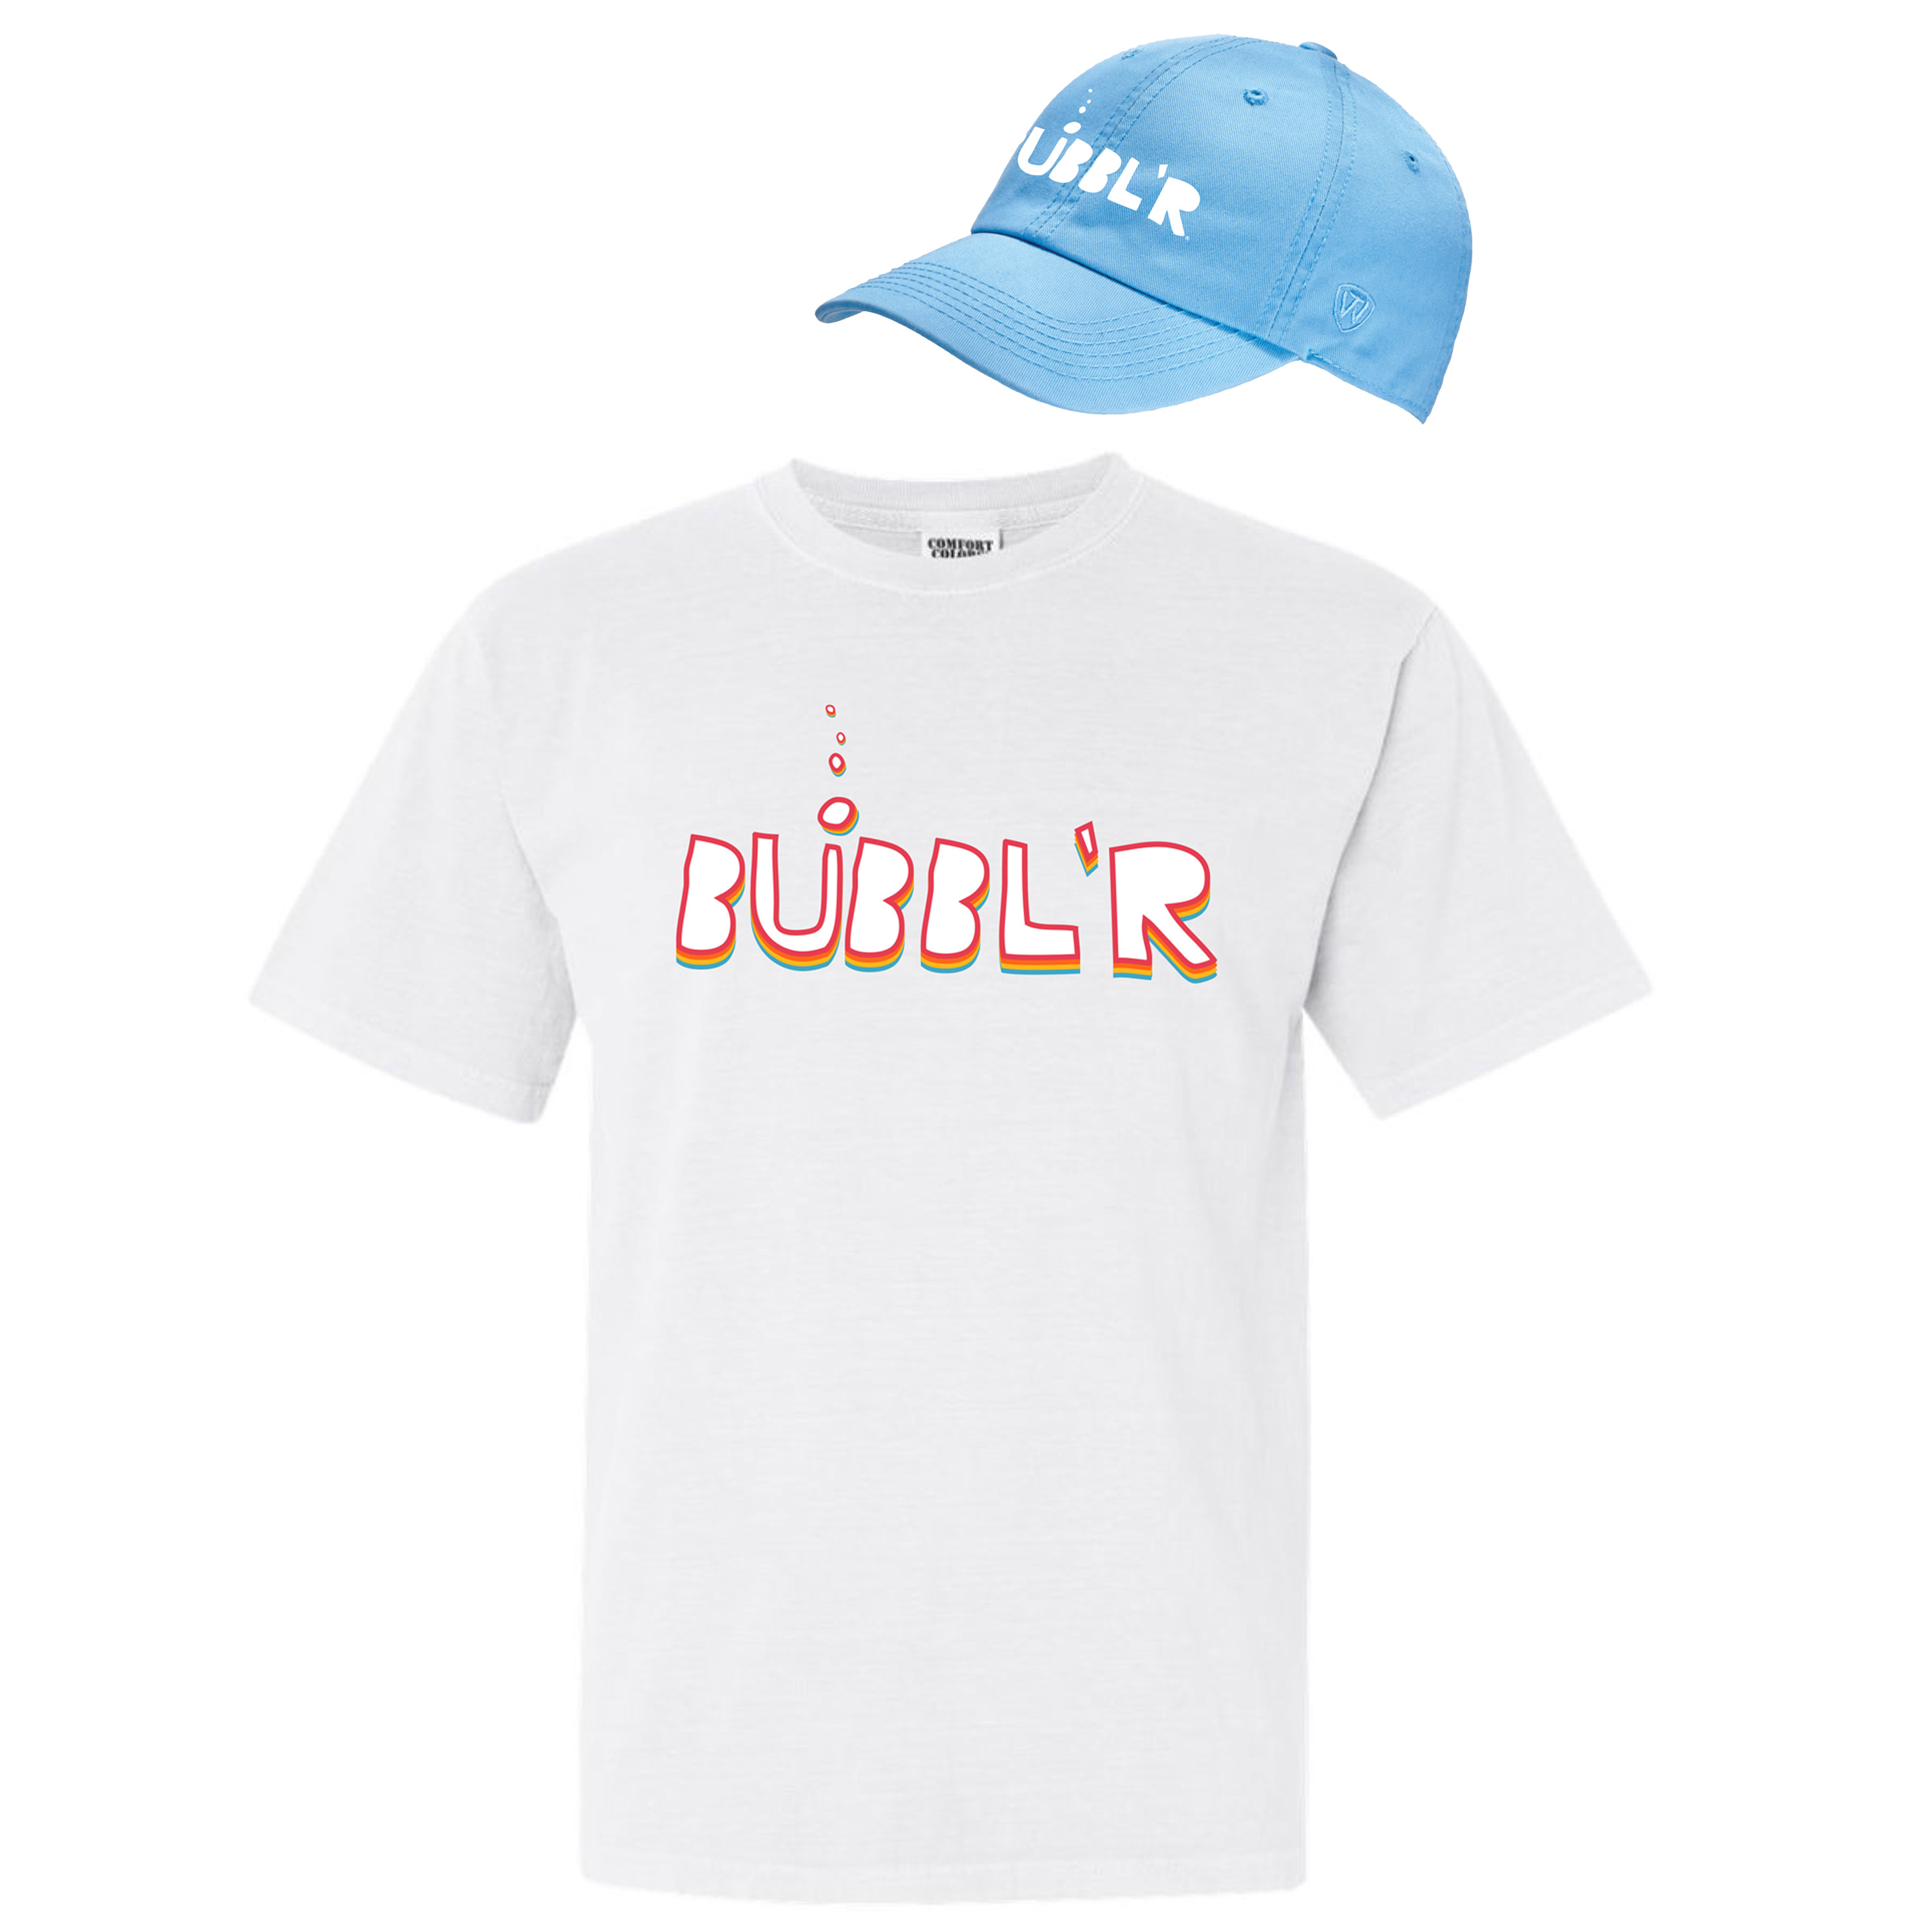 BUBBL’R T-Shirt & Hat